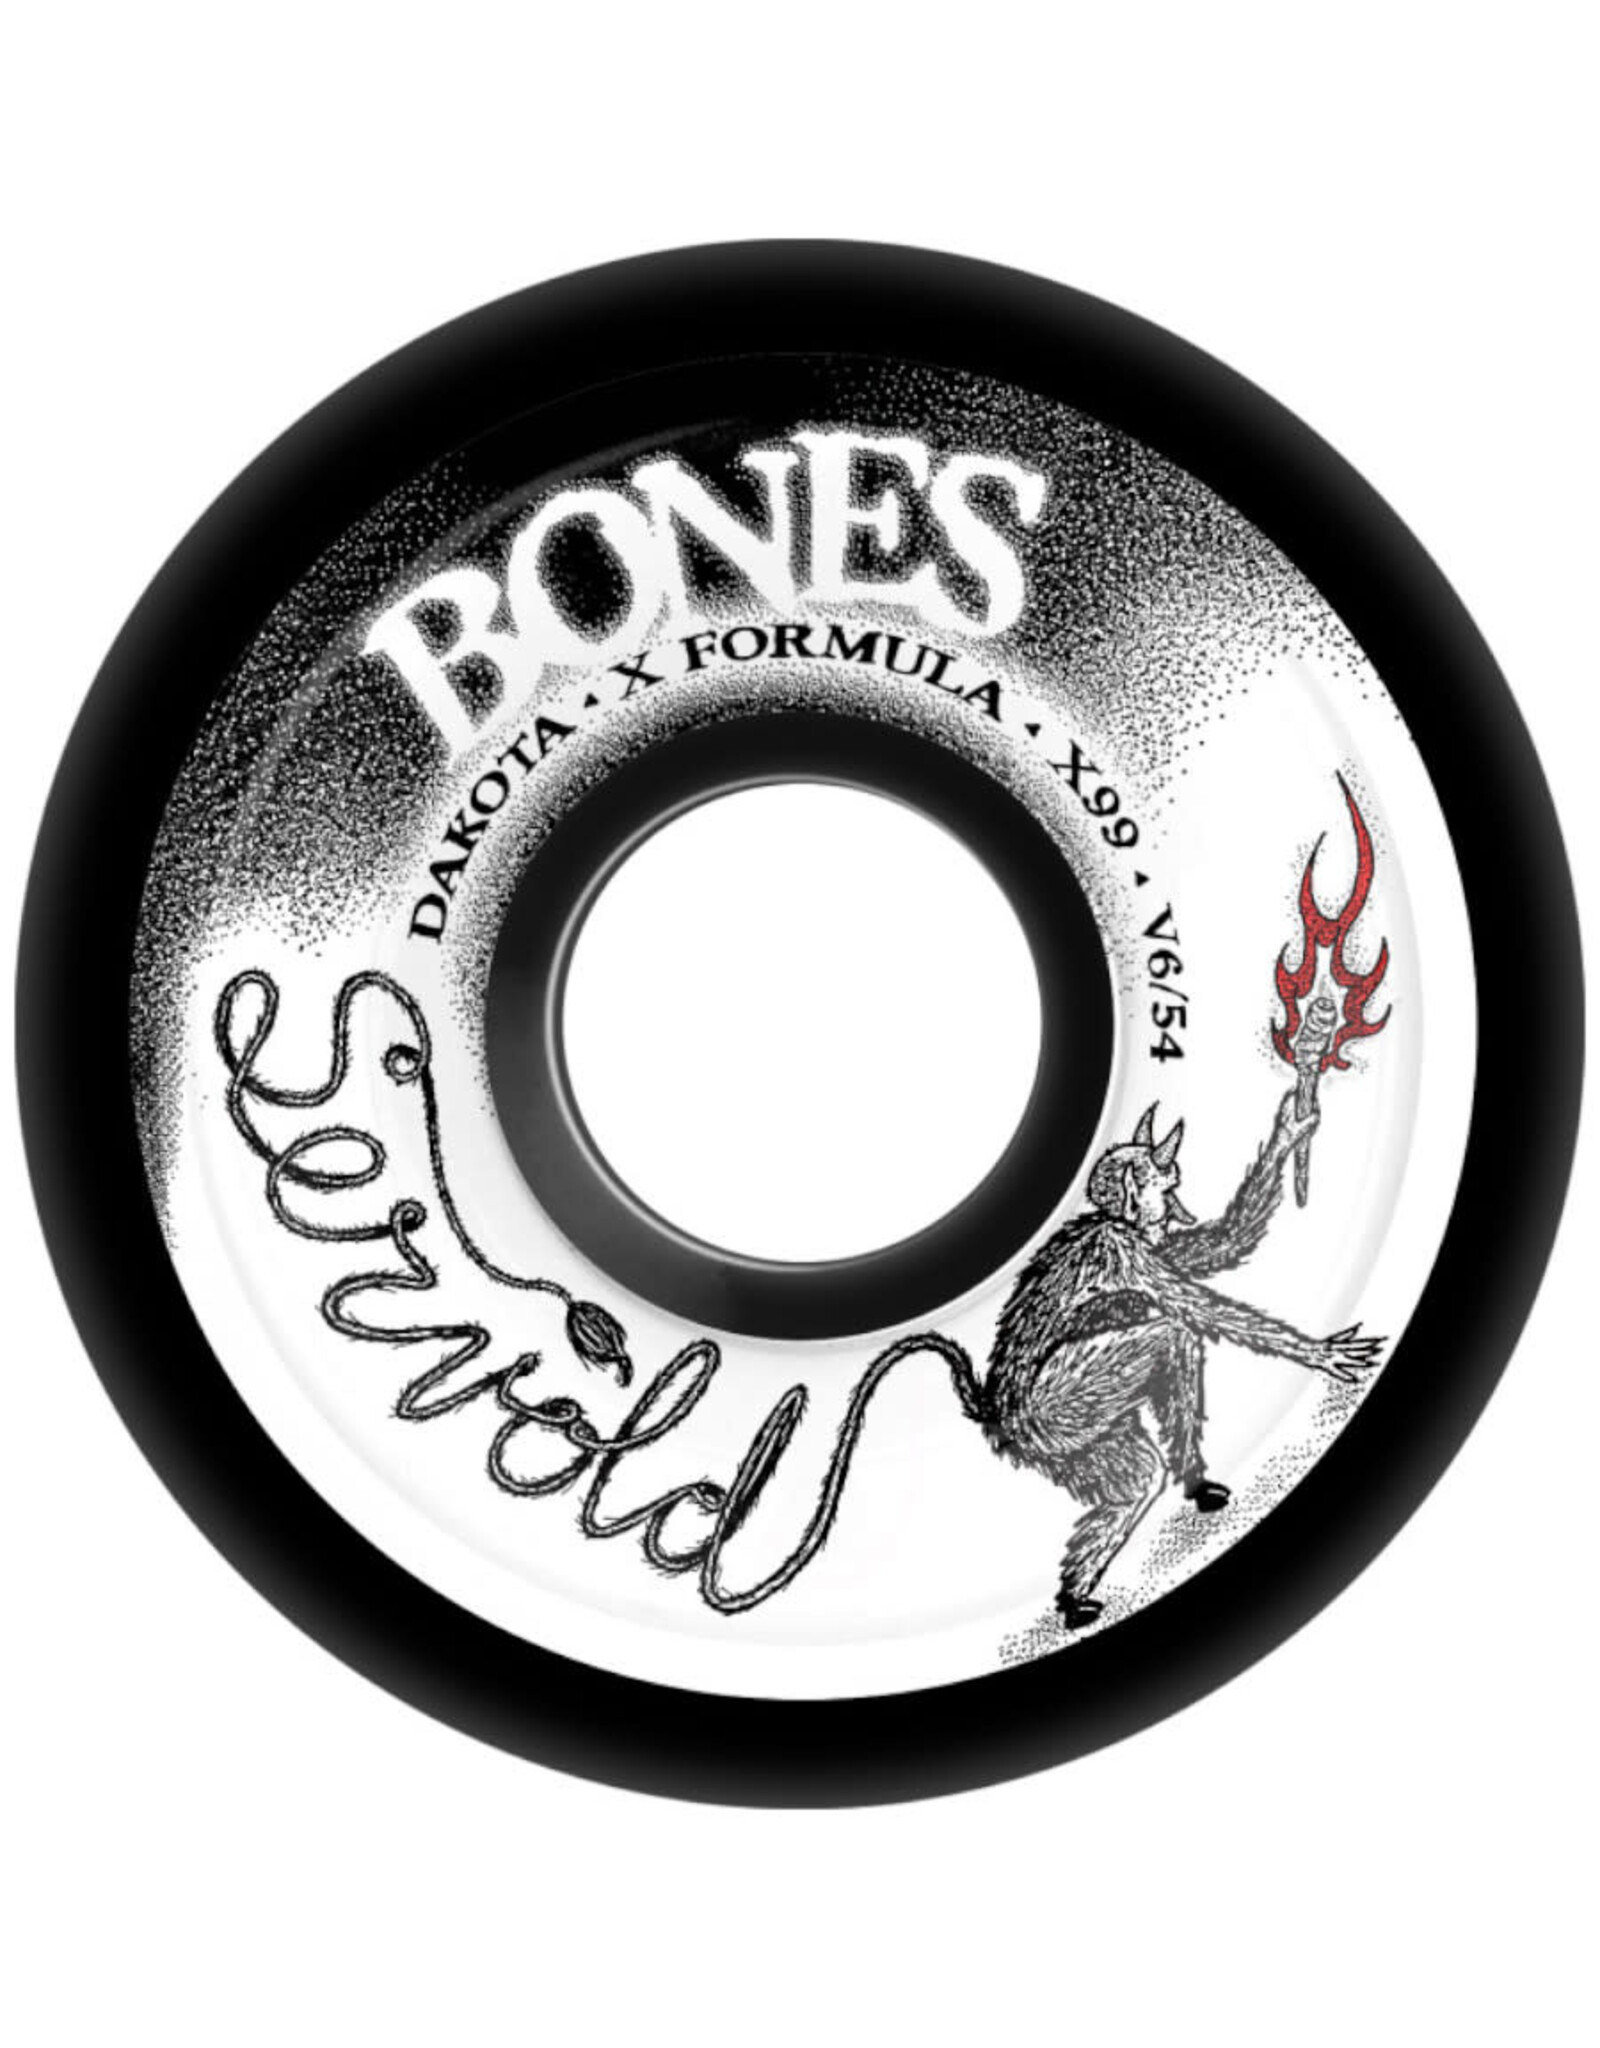 Bones Bones Wheels X99 Dakota Servold Eternal Search V6 Wide Cut Black (54mm/99d)